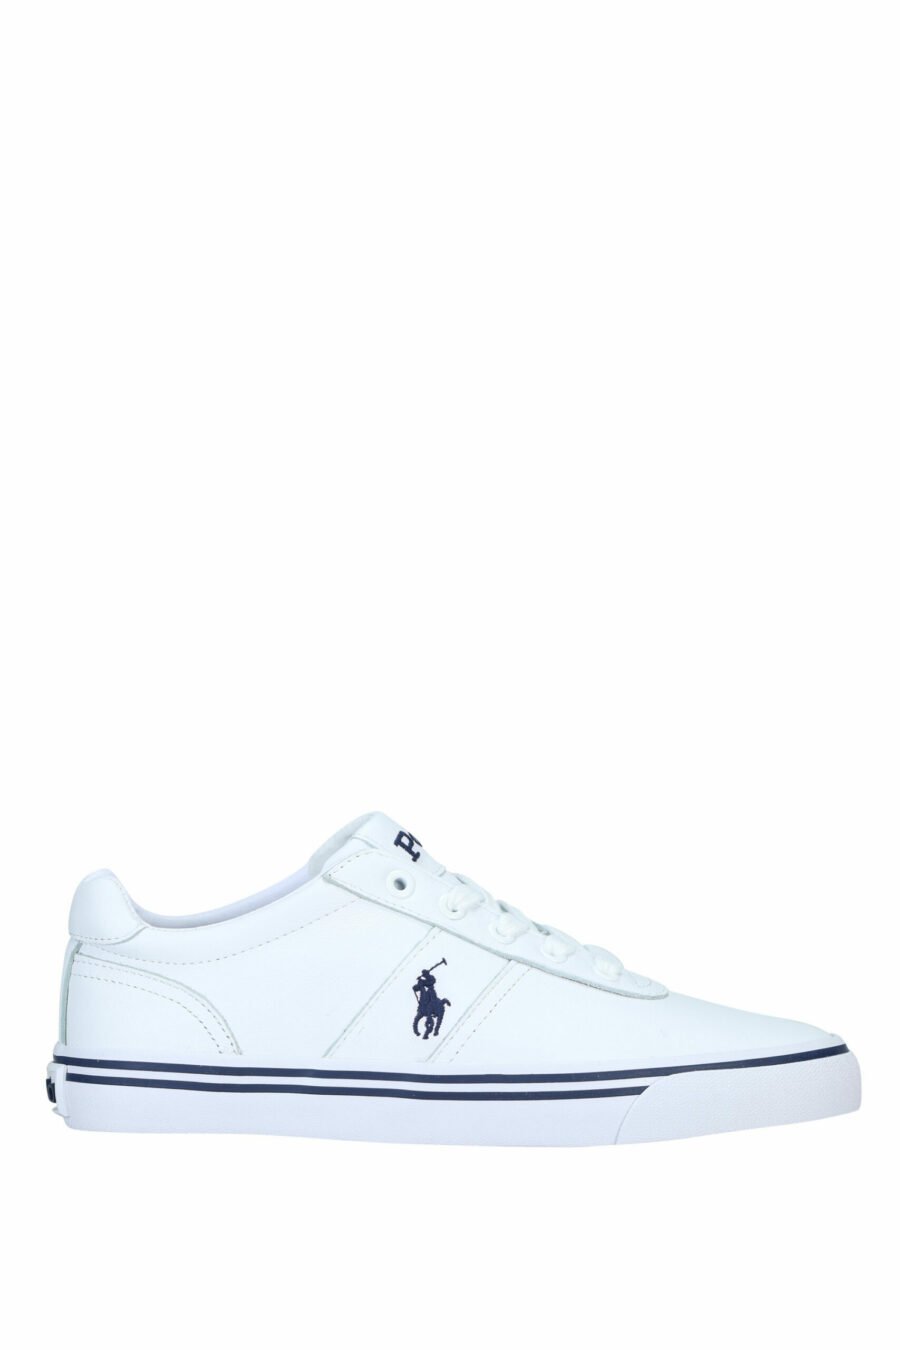 Zapatillas blancas con detalles azules y logo "polo" - 3615737560351 scaled